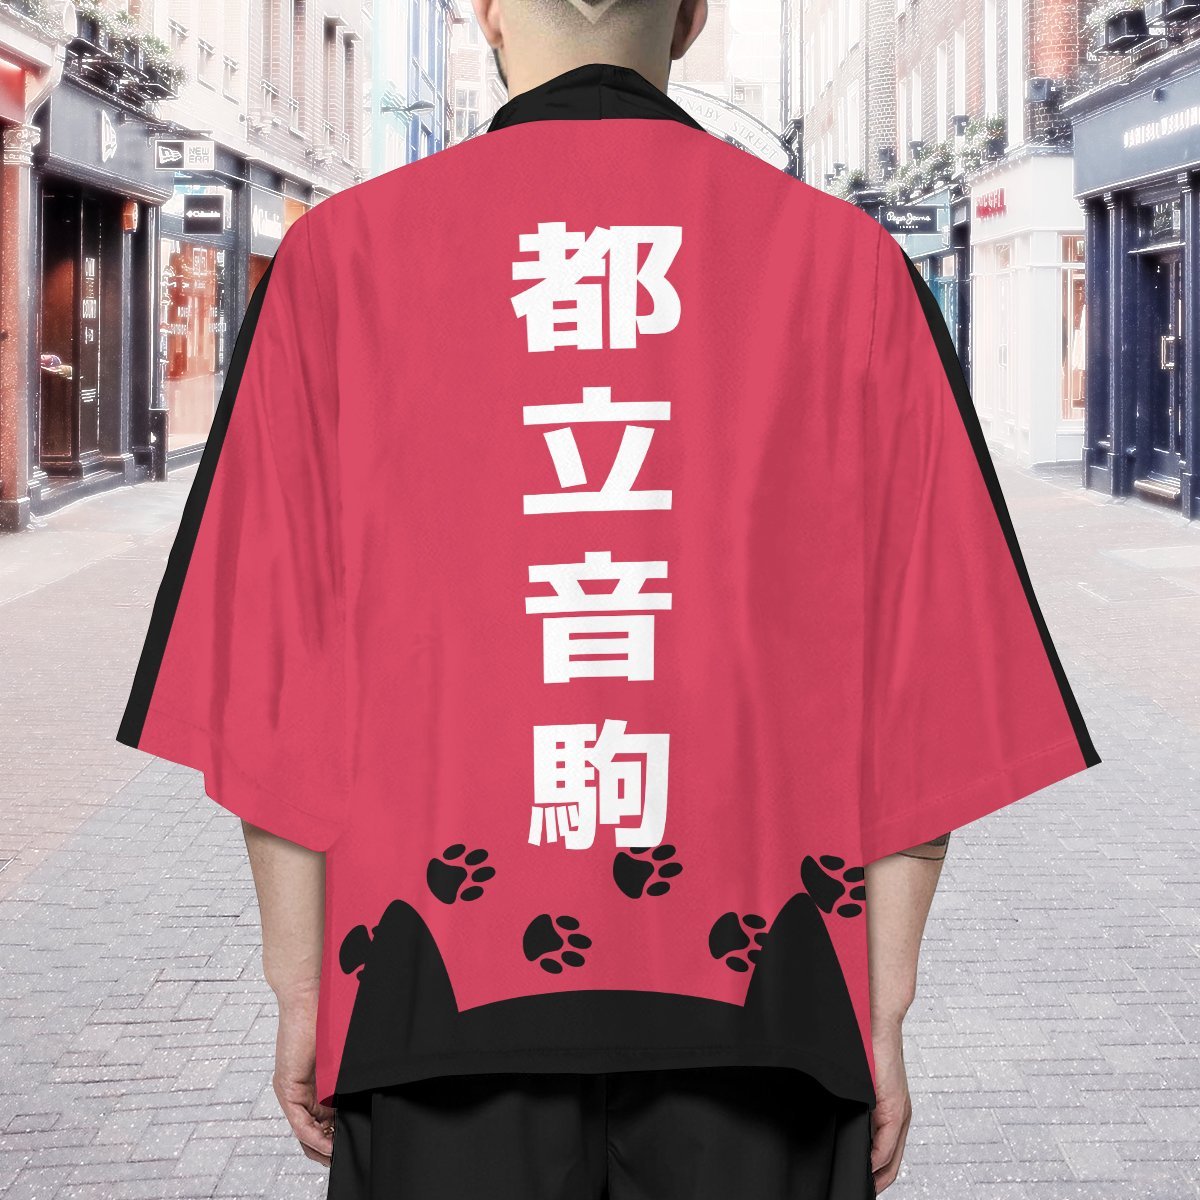 nekoma high cats kimono 851768 - Anime Kimono